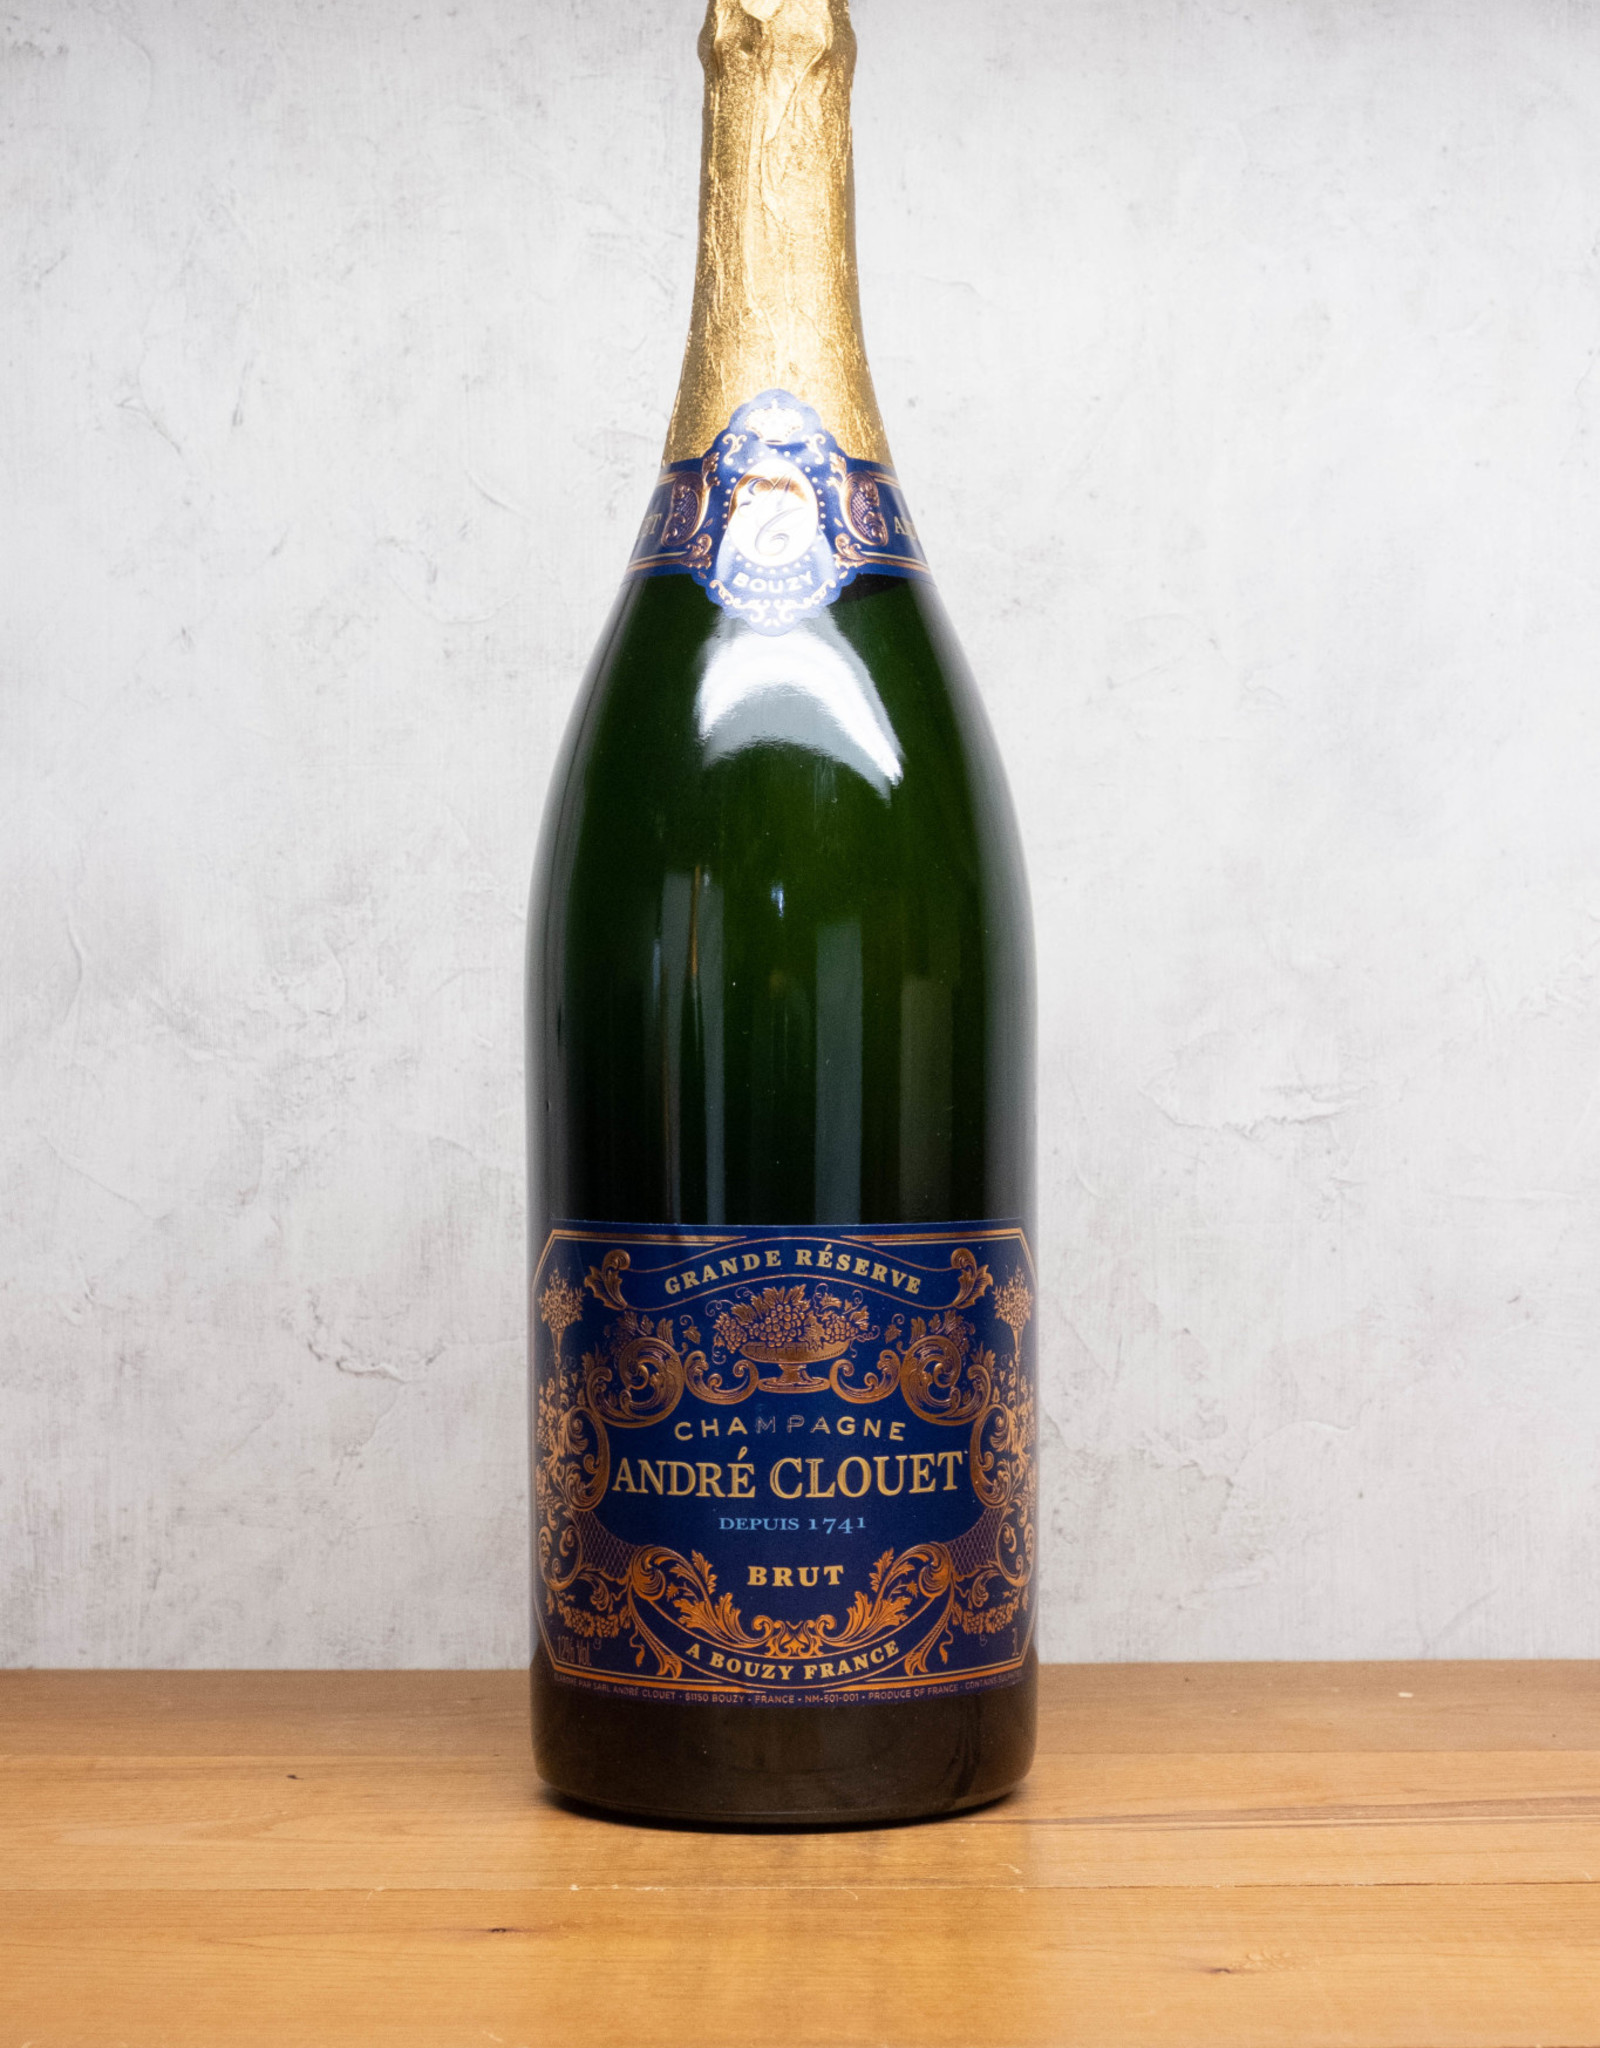 Andre Clouet Grand Reserve Brut Champagne 3L